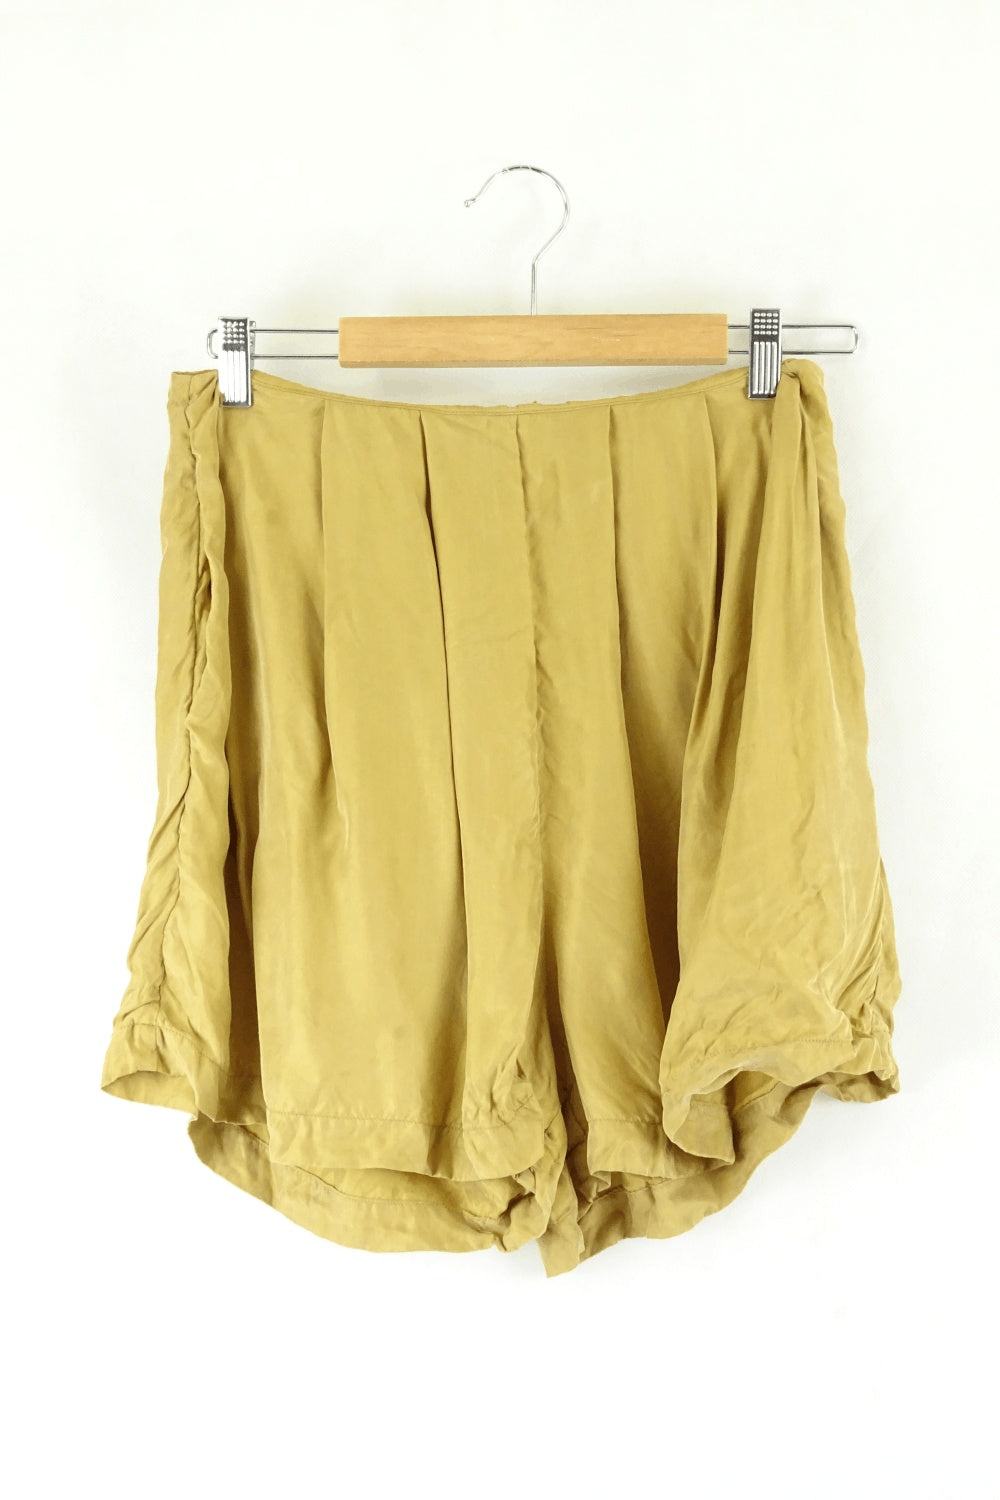 Sancia Yellow Shorts M